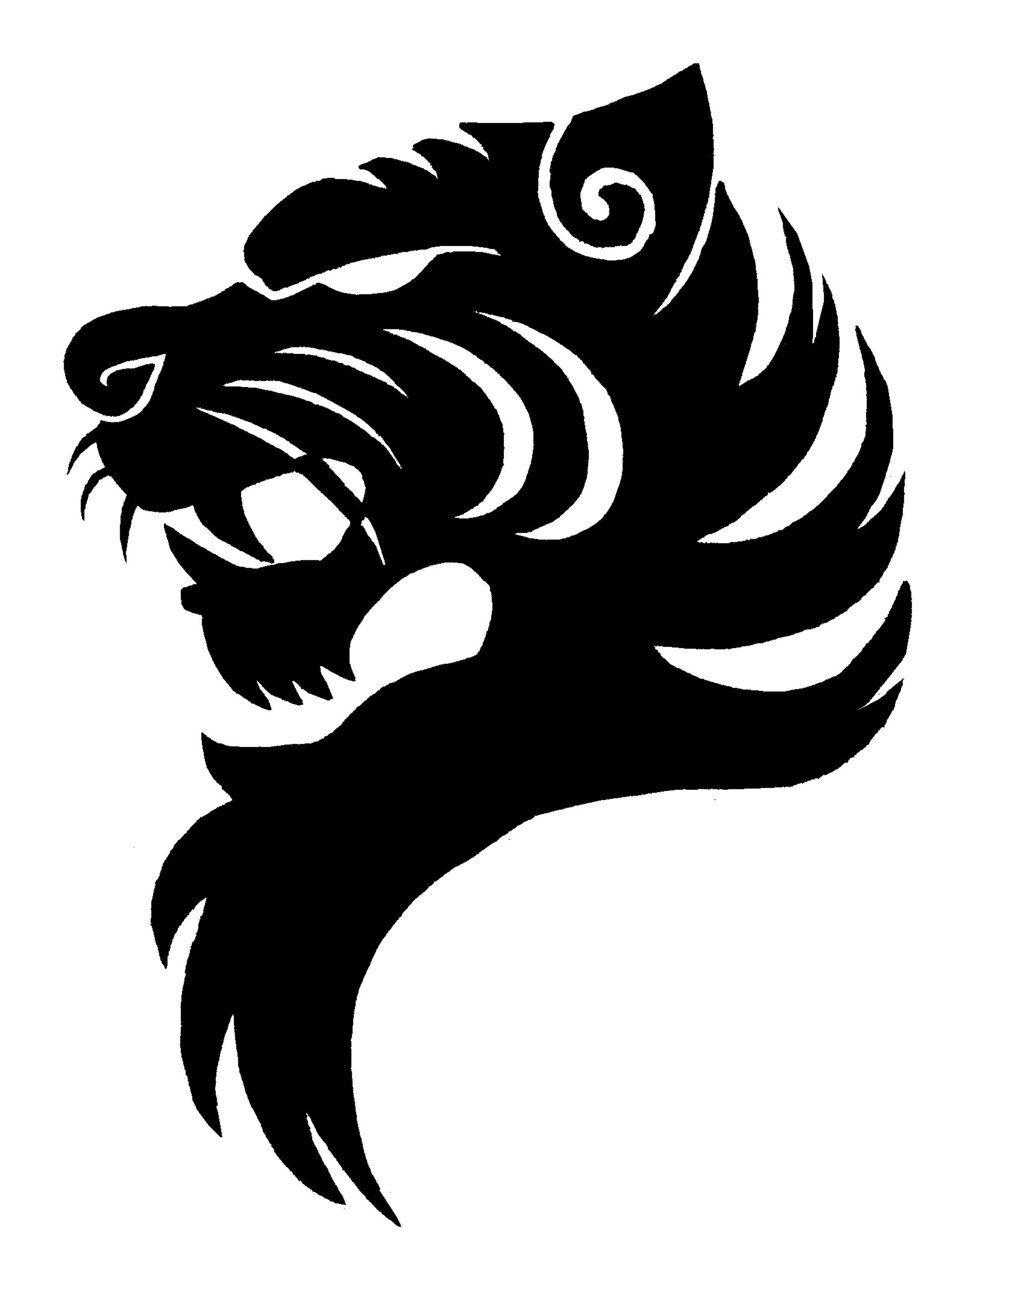 Black and White Tiger Logo - Tiger Logo Black And White Clipart Panda Free Clipart - Free Clipart